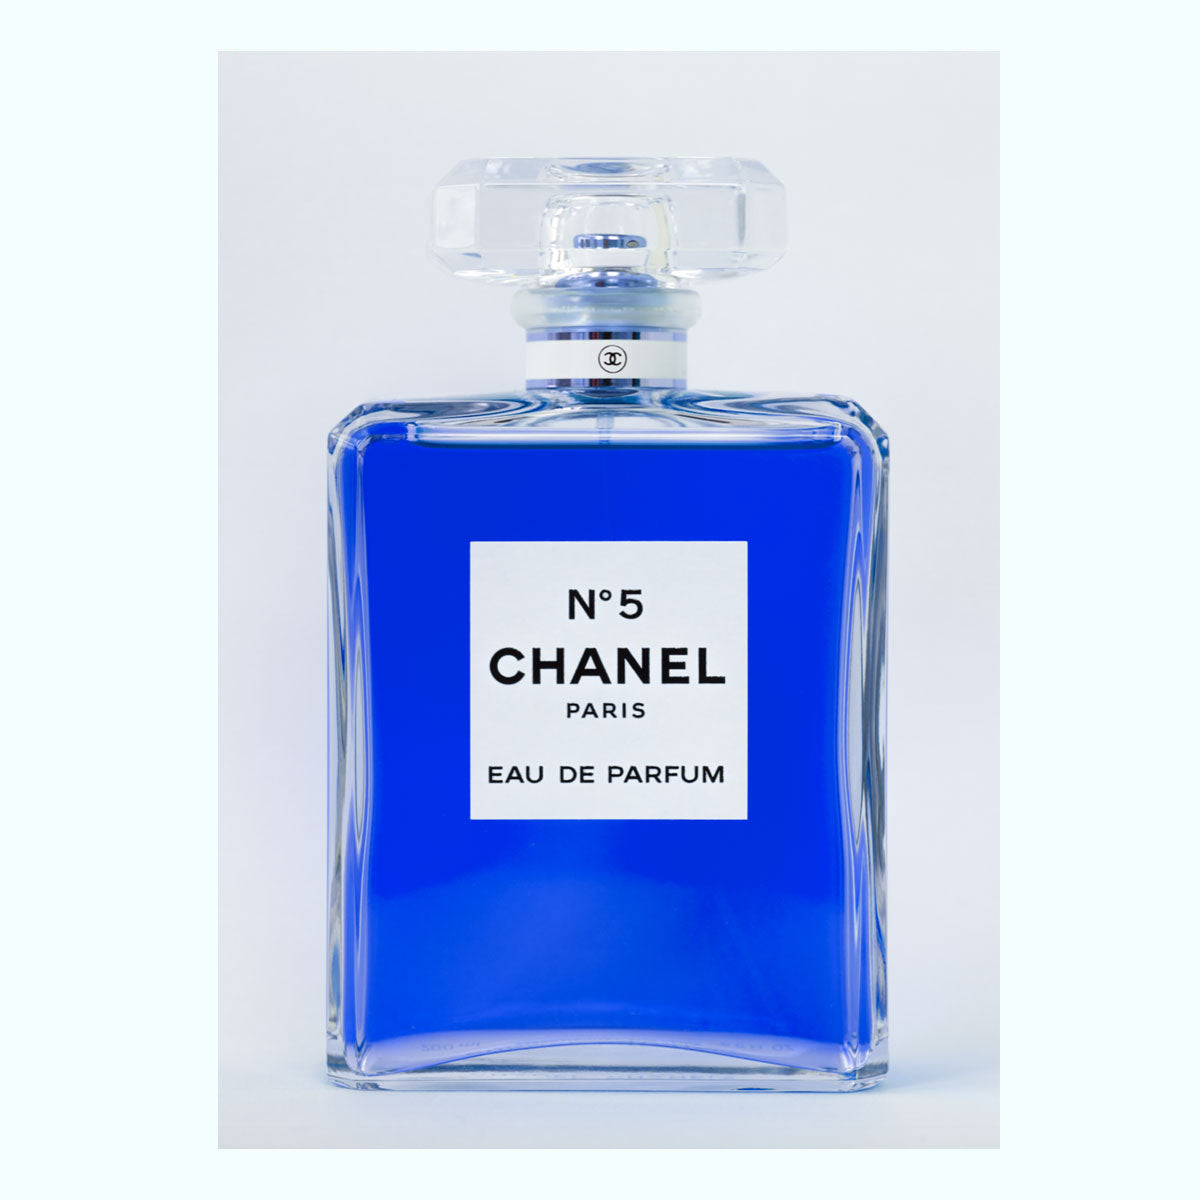 I Only Wear Chanel No.5 (Blue) Art Print